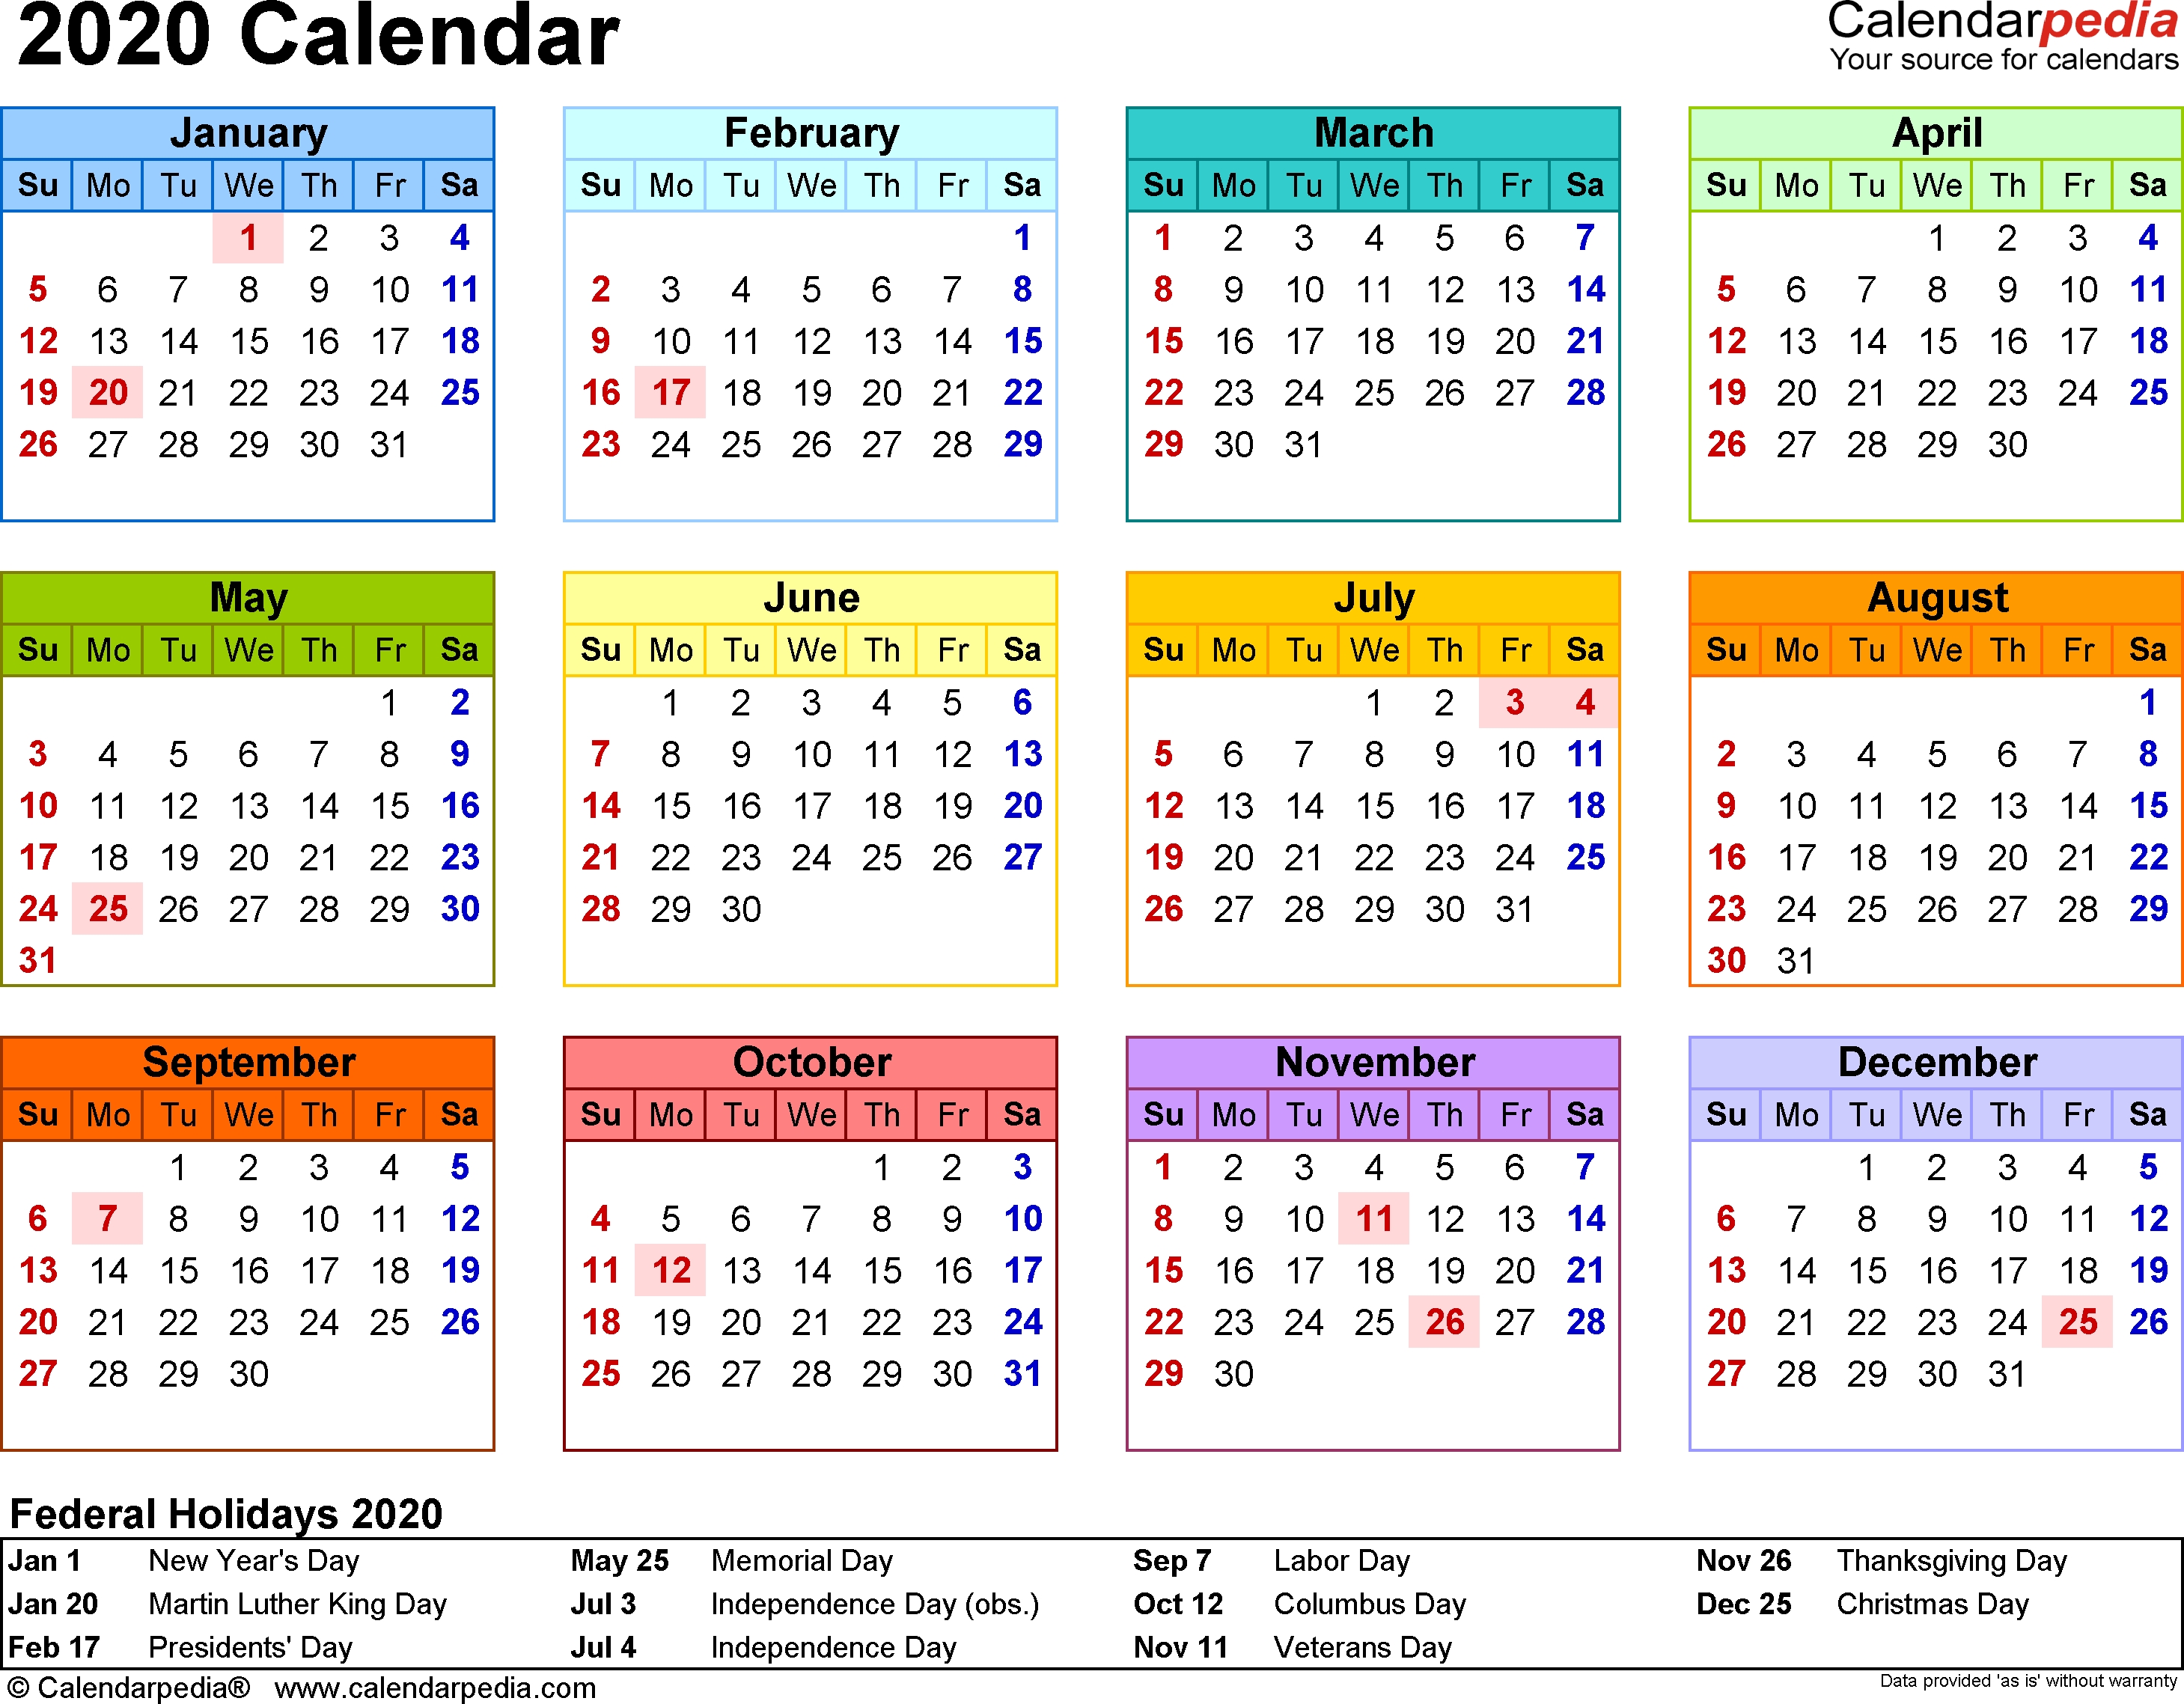 2020 Calendar Pdf - 17 Free Printable Calendar Templates for 2020 Free Printable Calendars Without Downloading